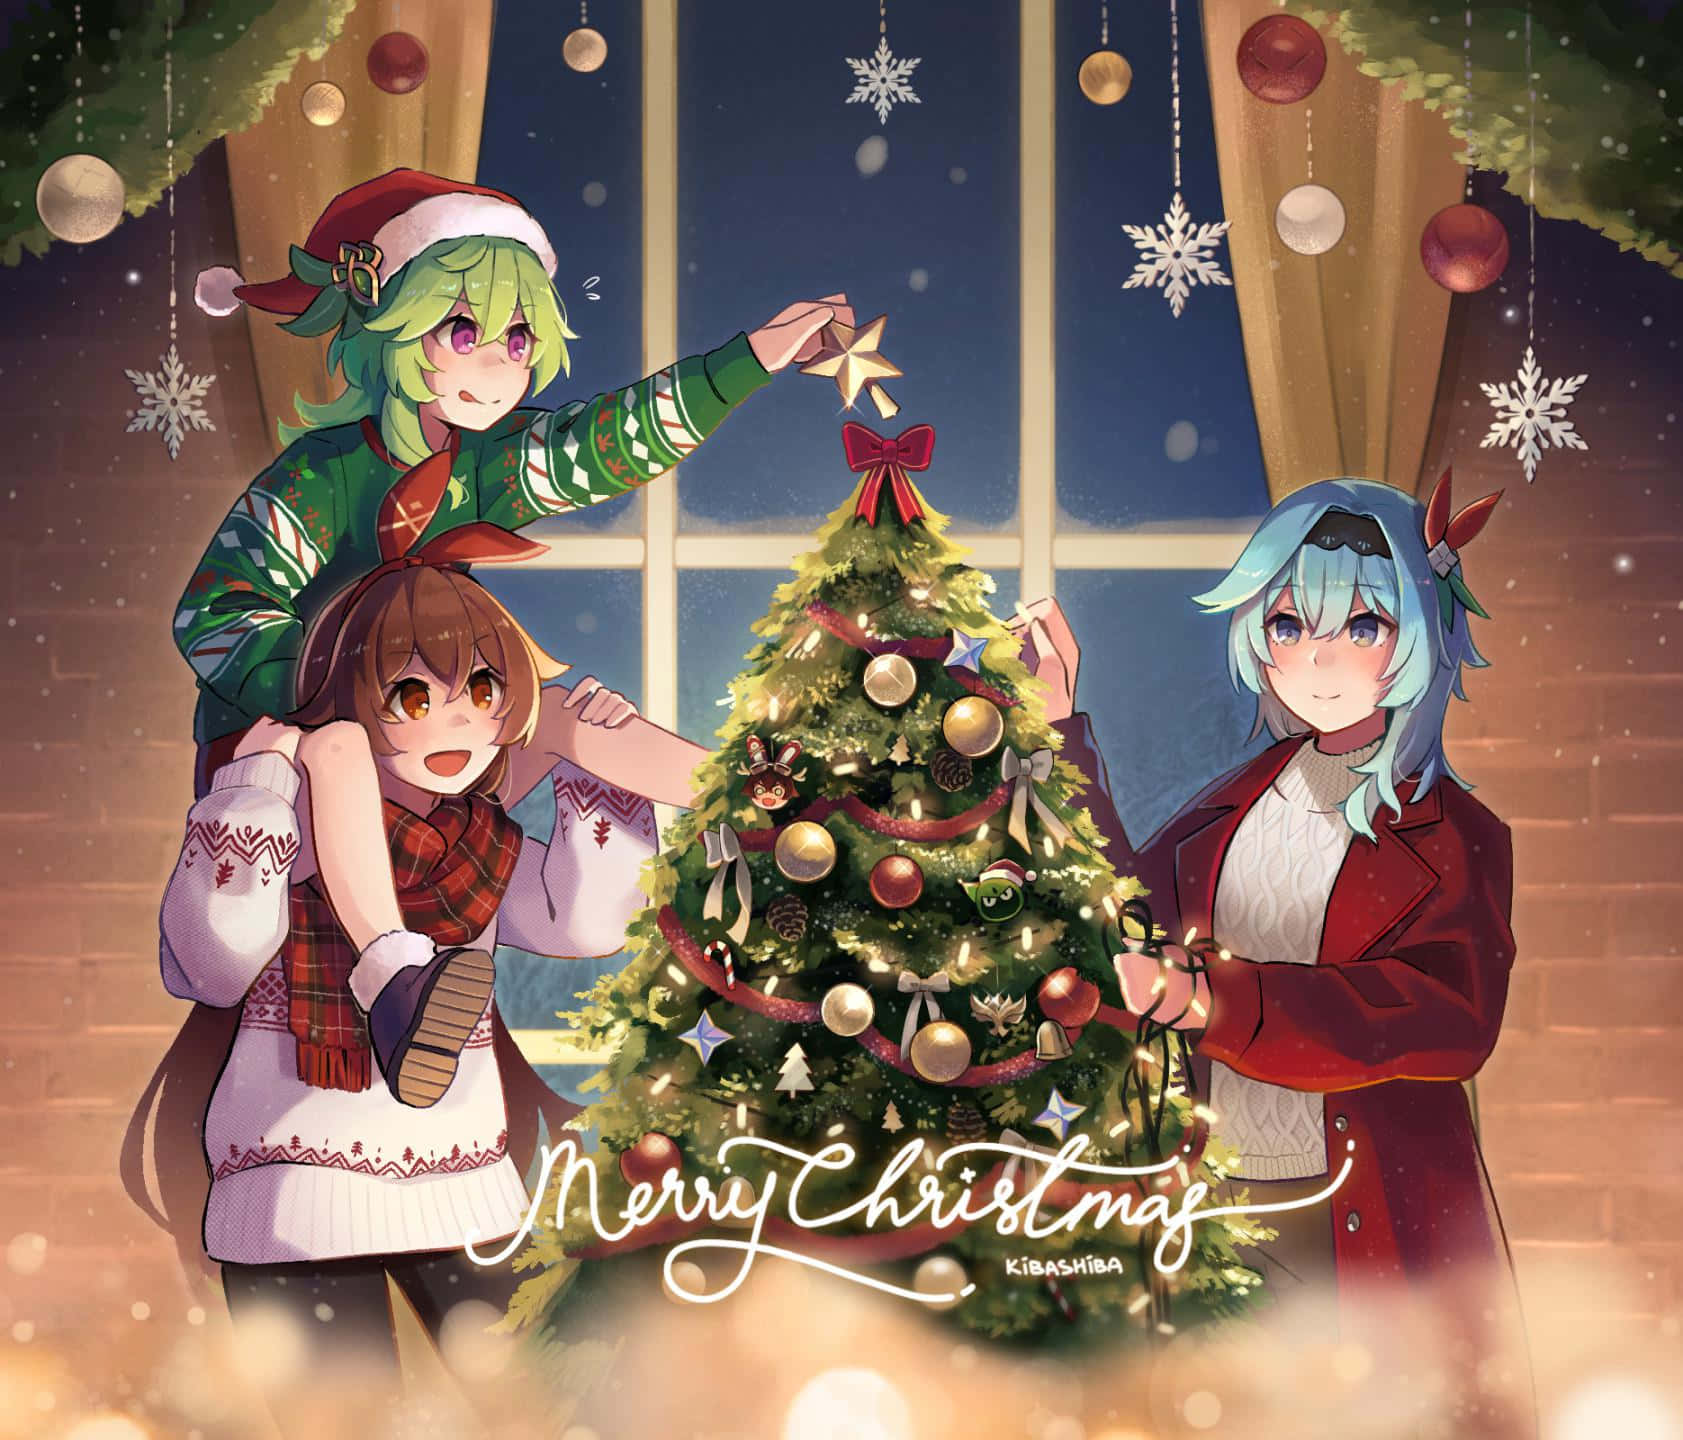 Celebrate Christmas Anime Style!